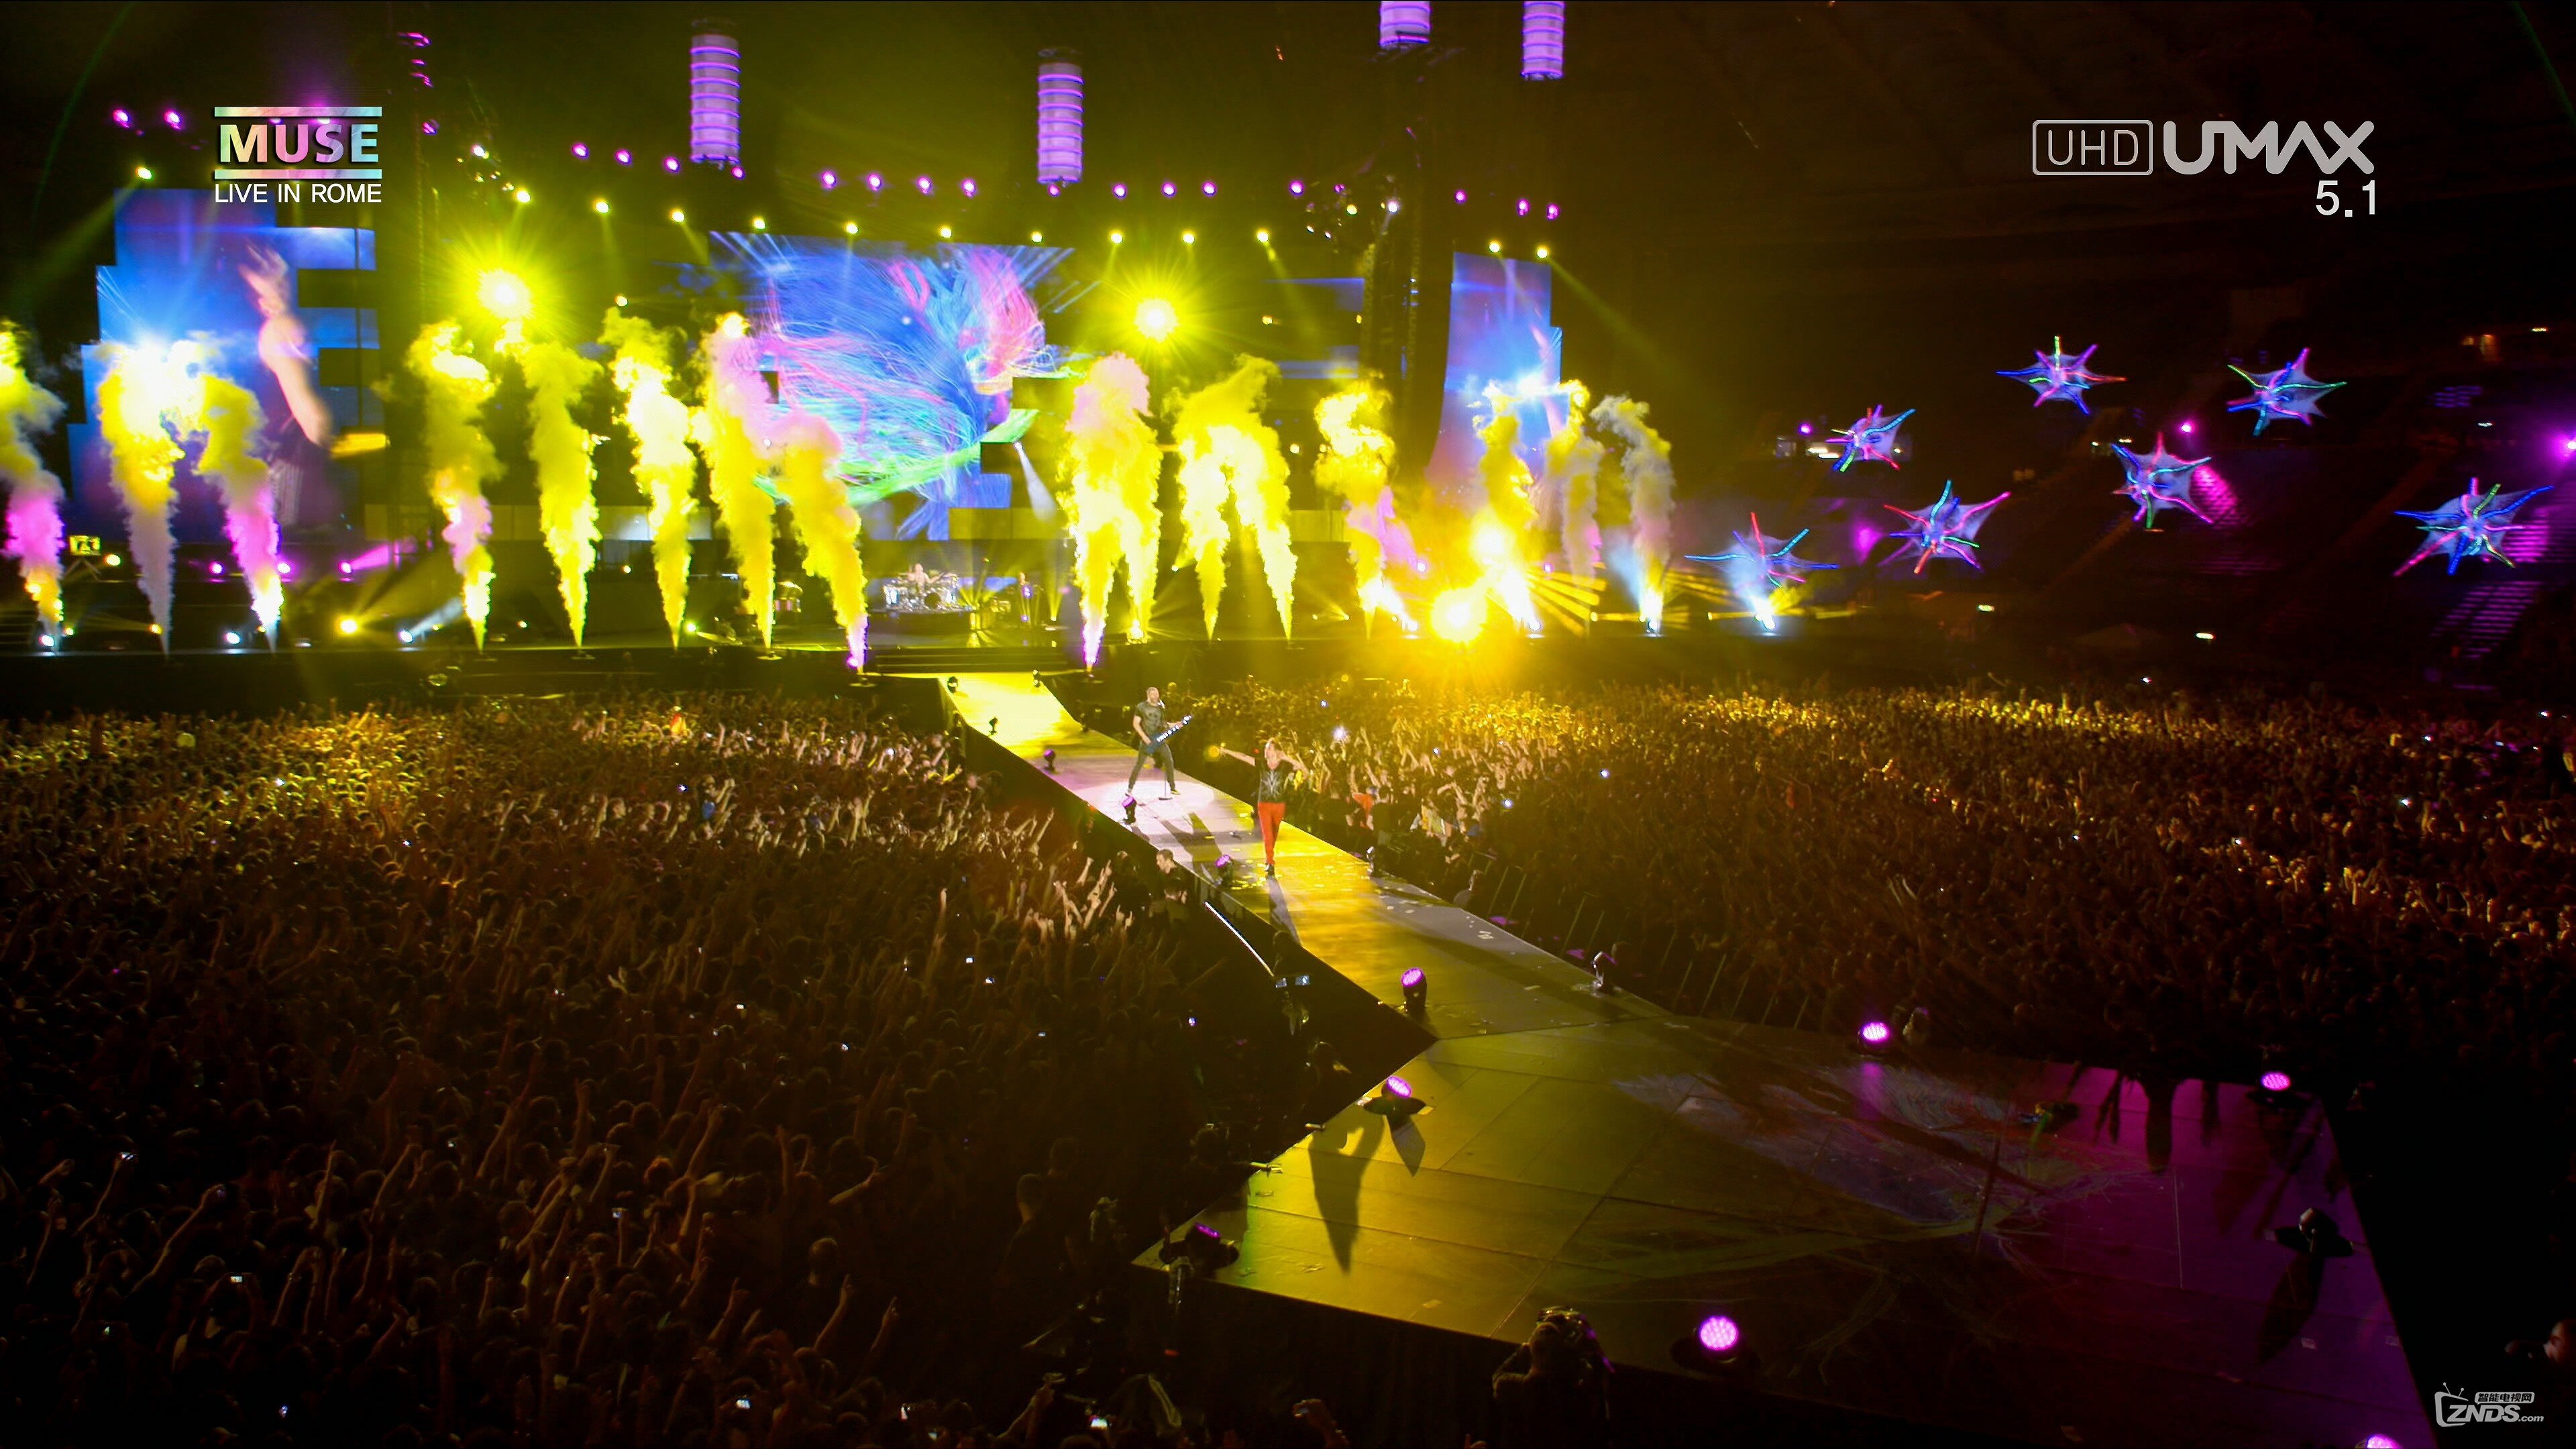 Muse.Live.At.Rome.Olympic.Stadium.2013.2160p.UHDTV.HEVC.mkv_20160312_235258.536.jpg